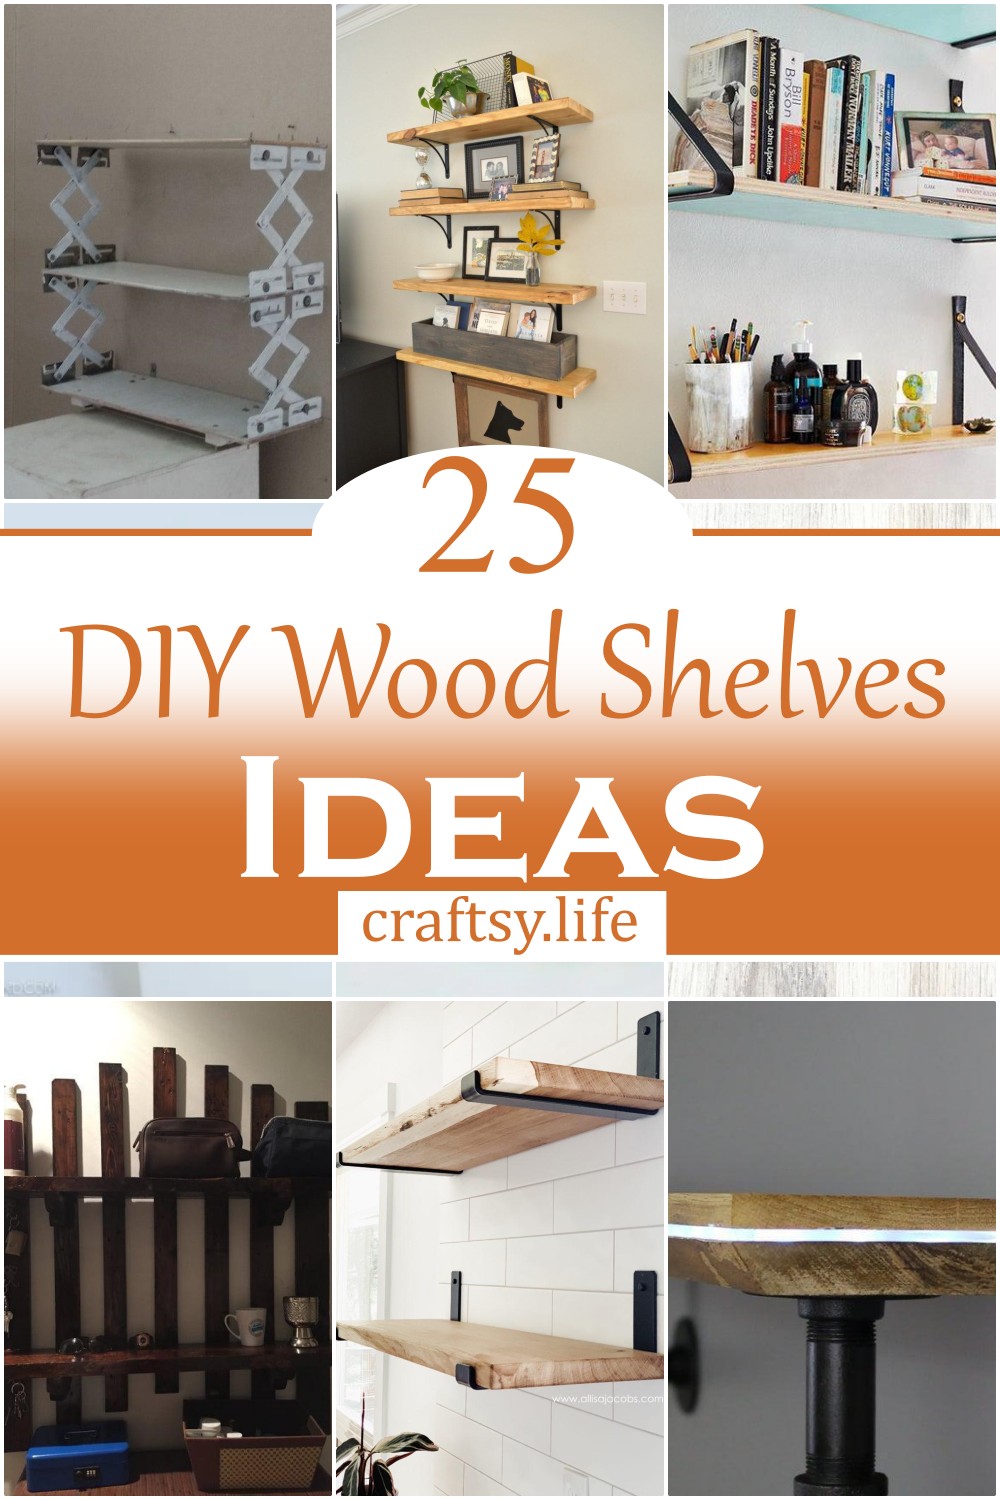 DIY Wood Shelves Ideas